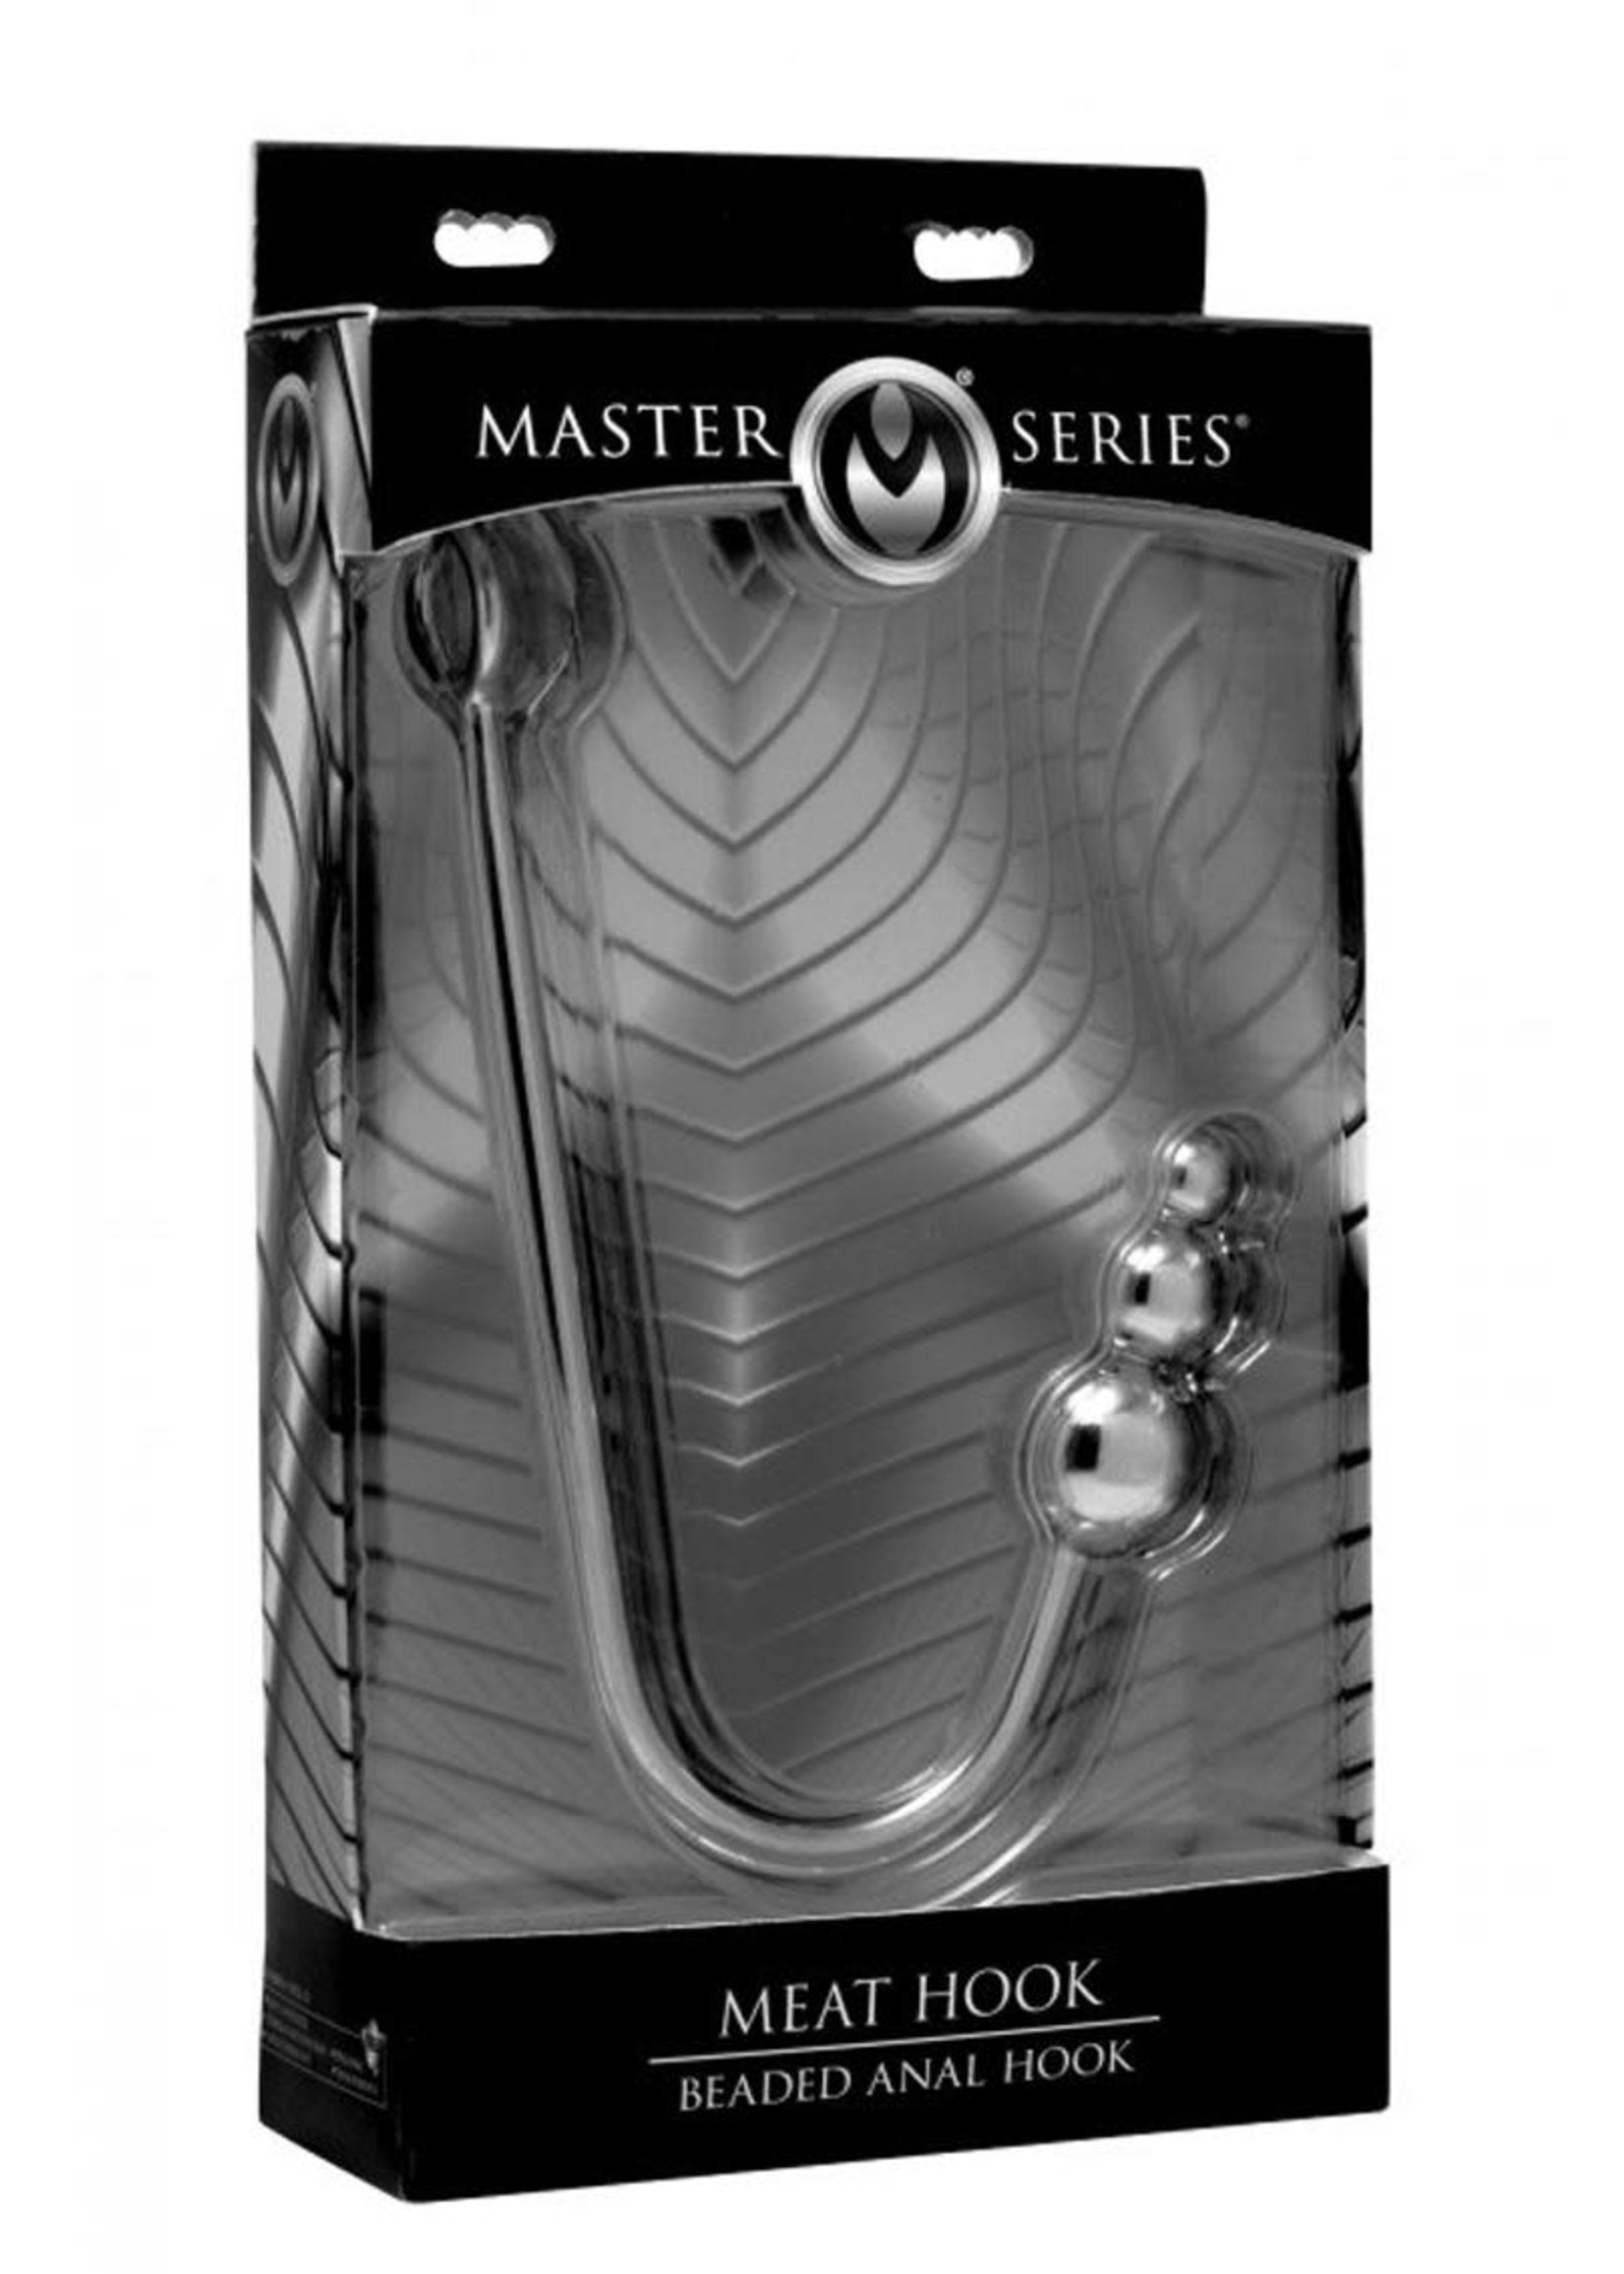 XR Brands Master Series Meat Hook Beaded Anal Hook Stainless Steel 16 Inch